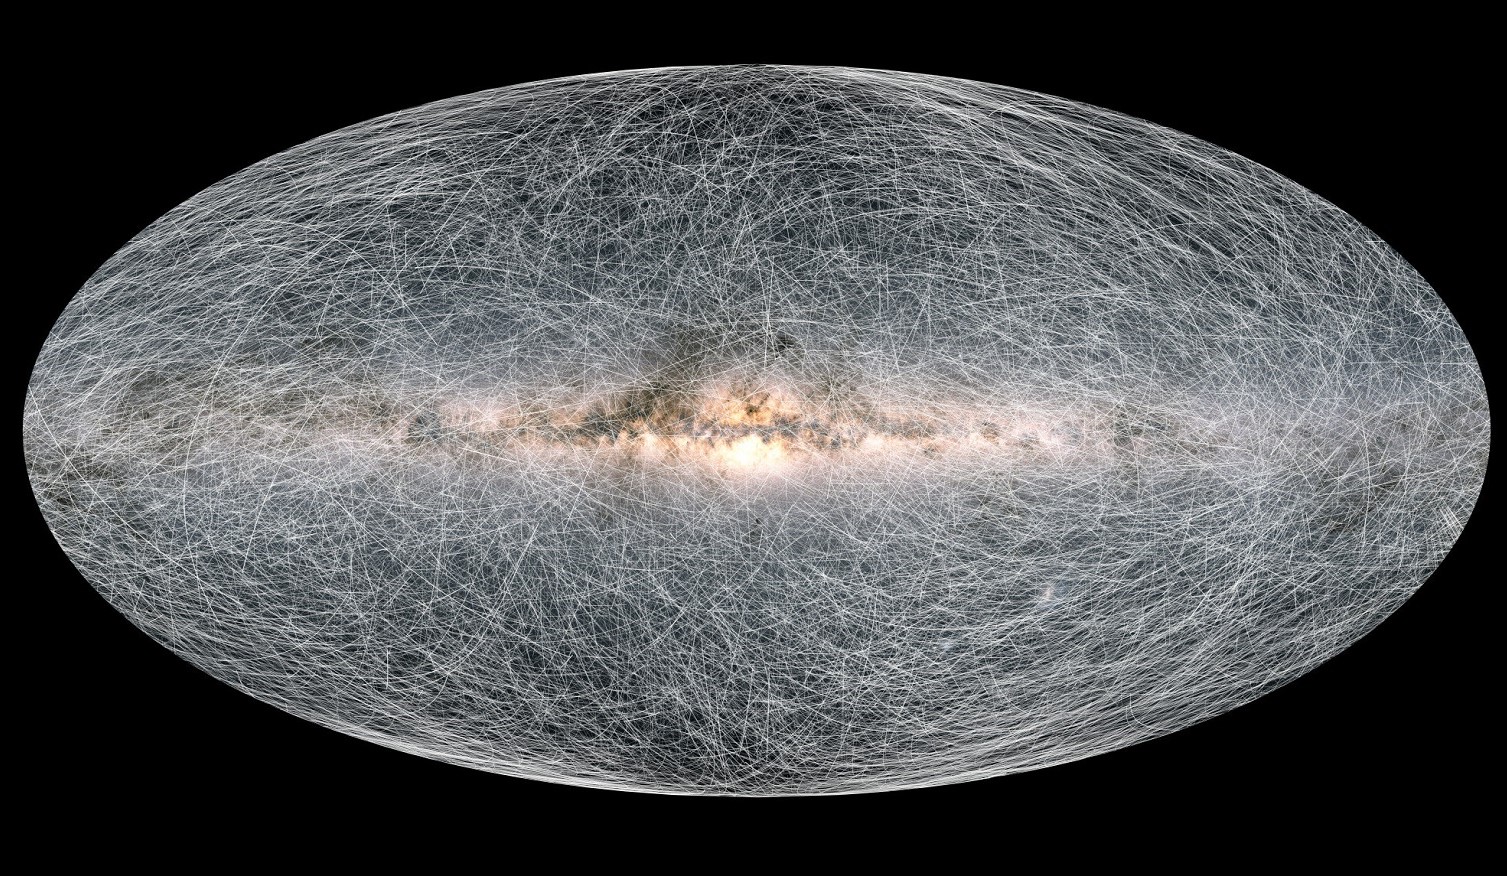 en detayli samanyolu galaksisi haritasi ortaya cikarildi 1